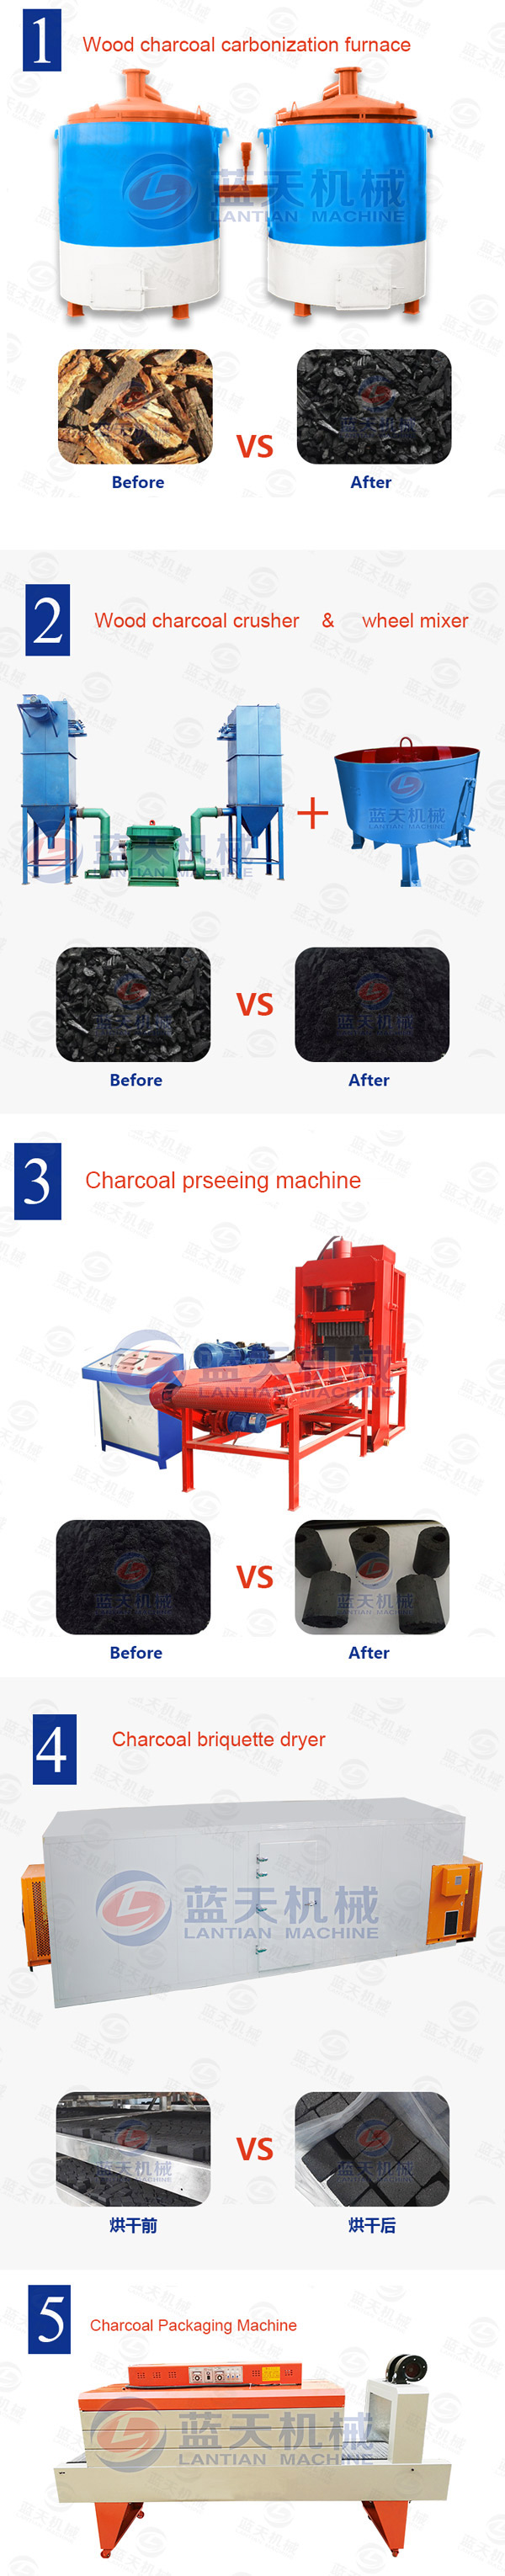 Coal Briquette Packaging Machine